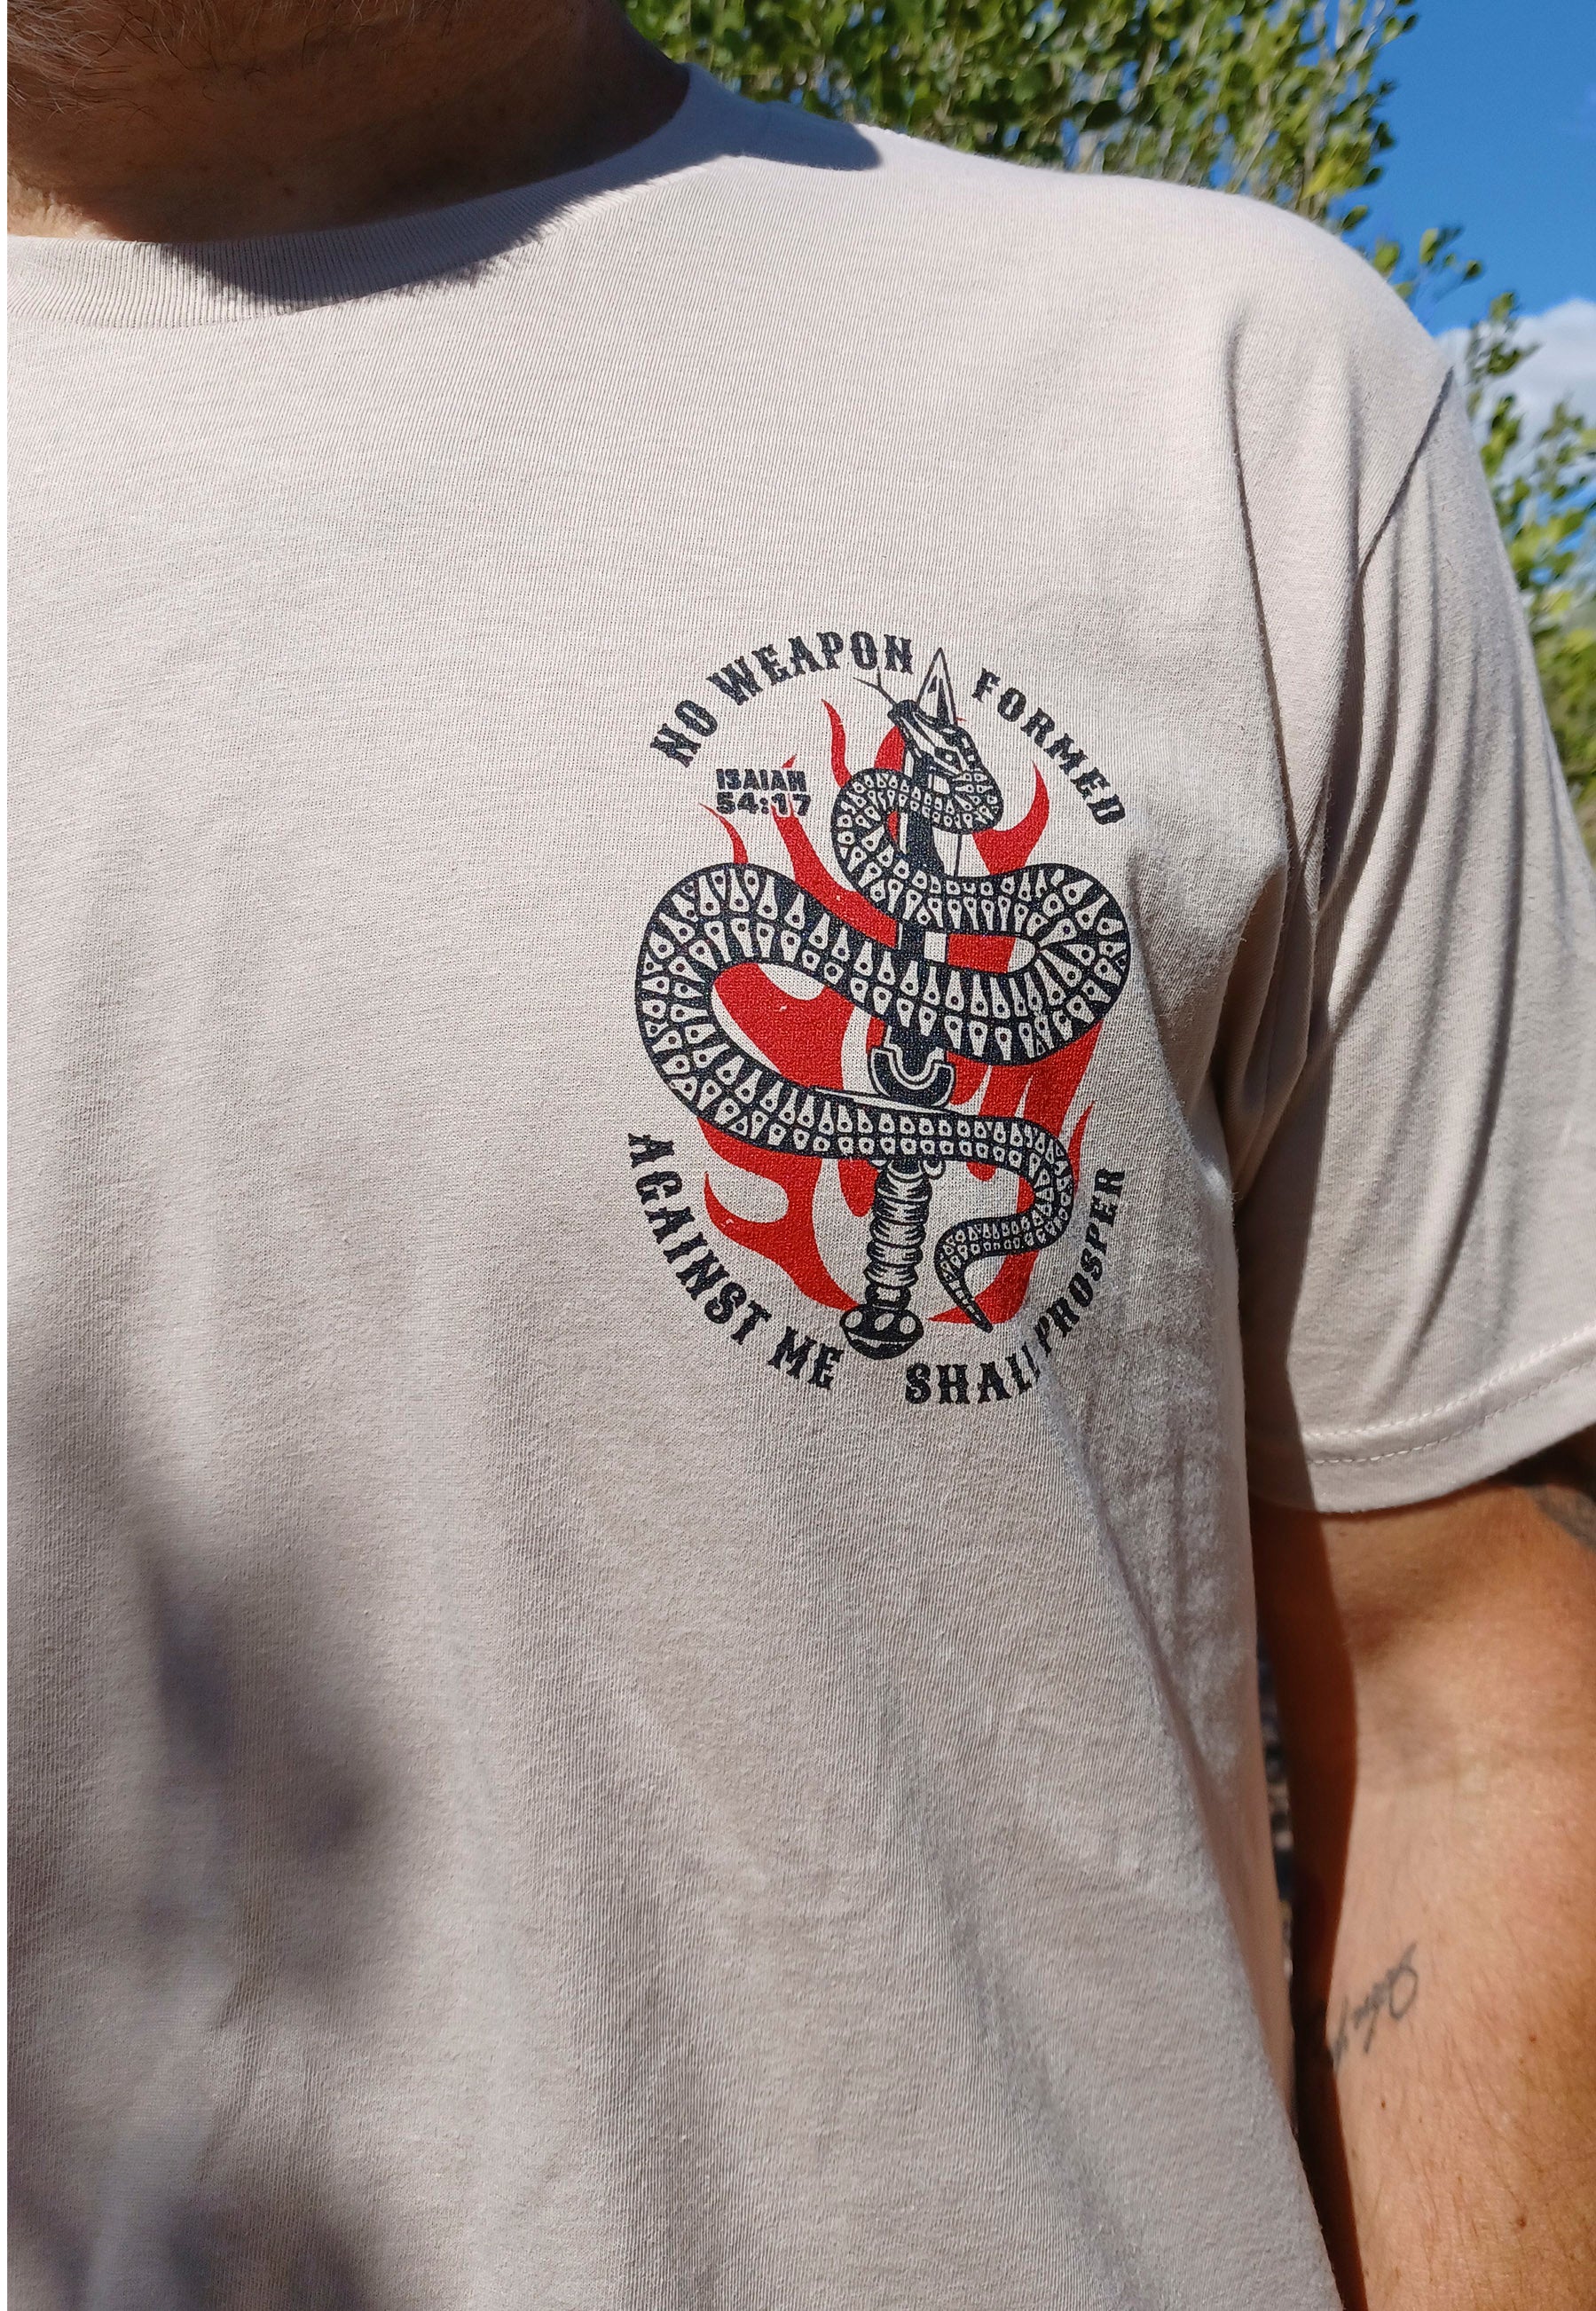 Christian patriot t-shirt chest print